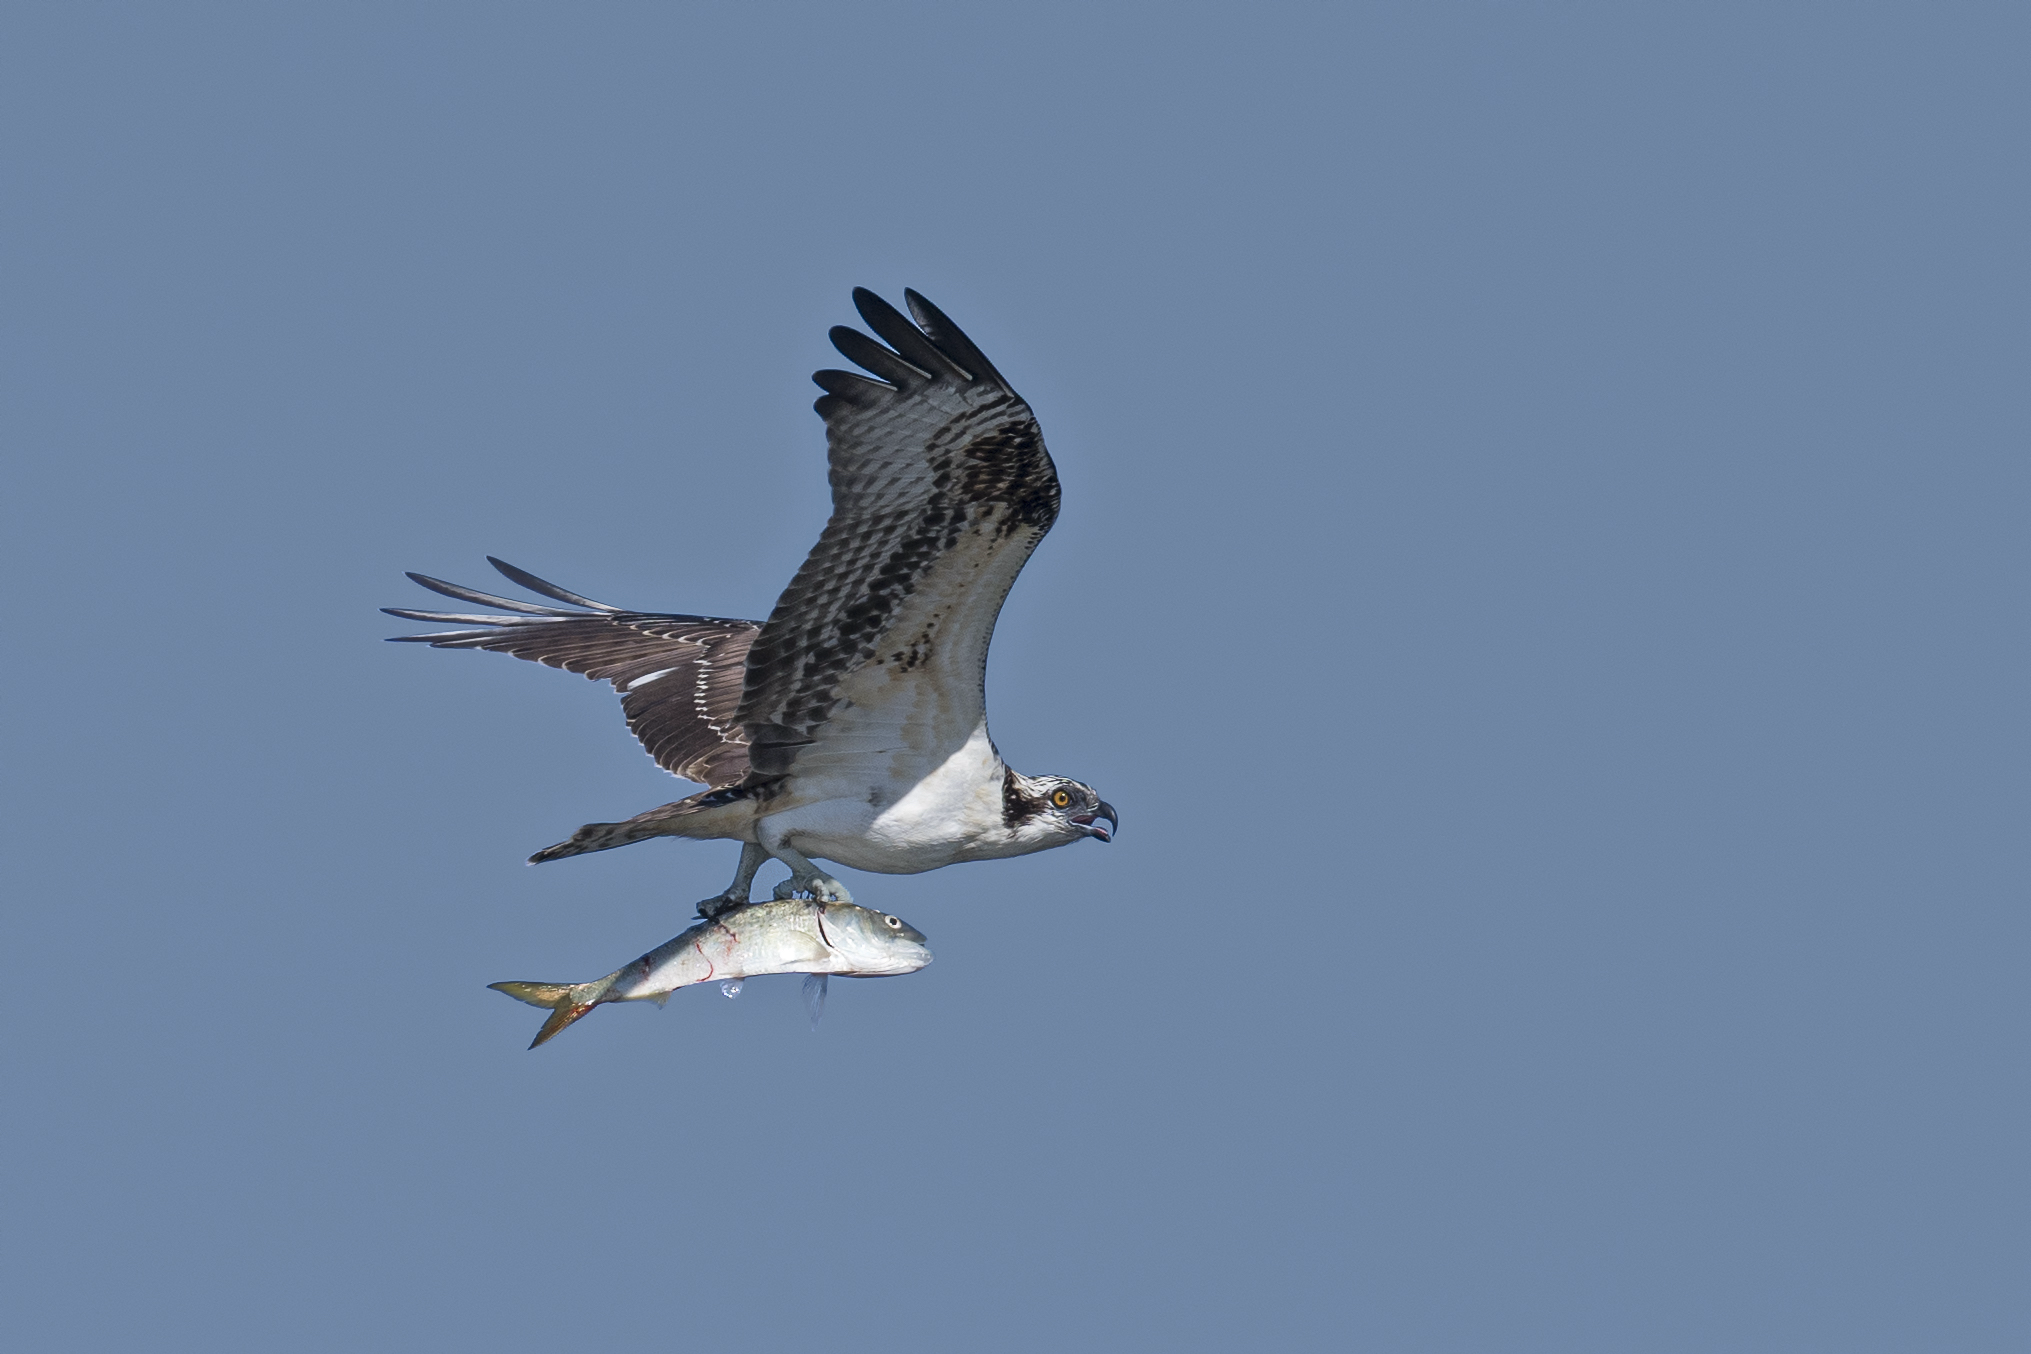 Osprey in flight with menhaden in talons